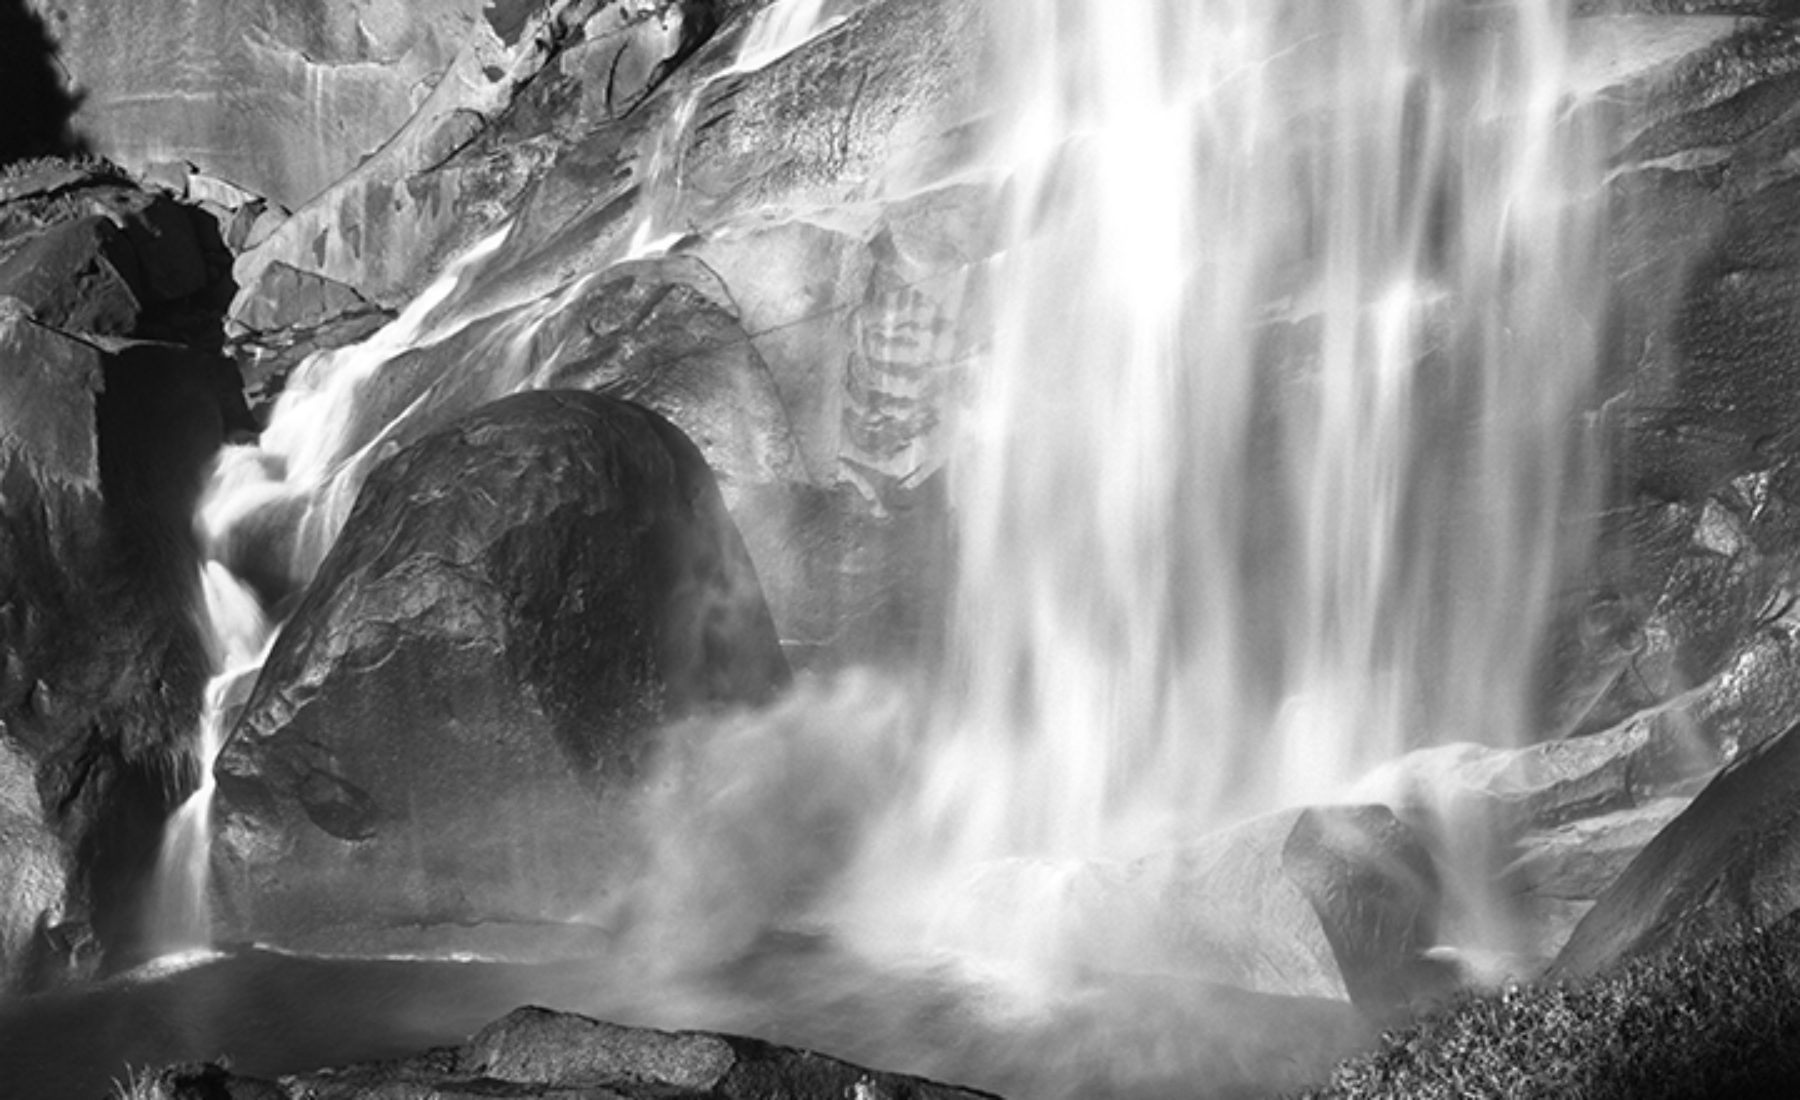 Vernal Falls at a close